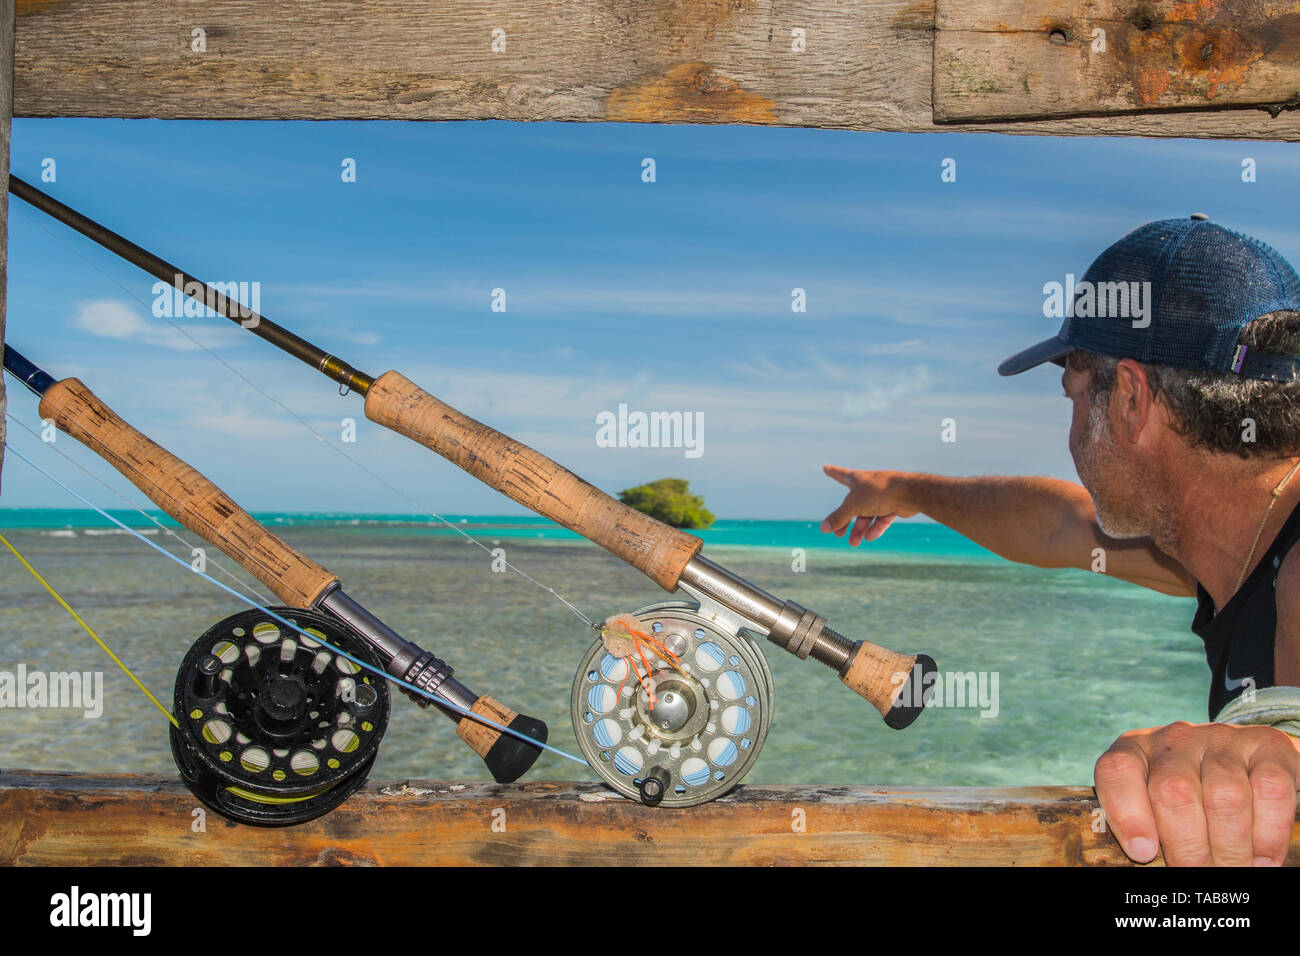 https://c8.alamy.com/comp/TAB8W9/fisherman-with-sport-fishing-gear-in-tropical-mangrove-los-roques-archipelago-venezuela-TAB8W9.jpg